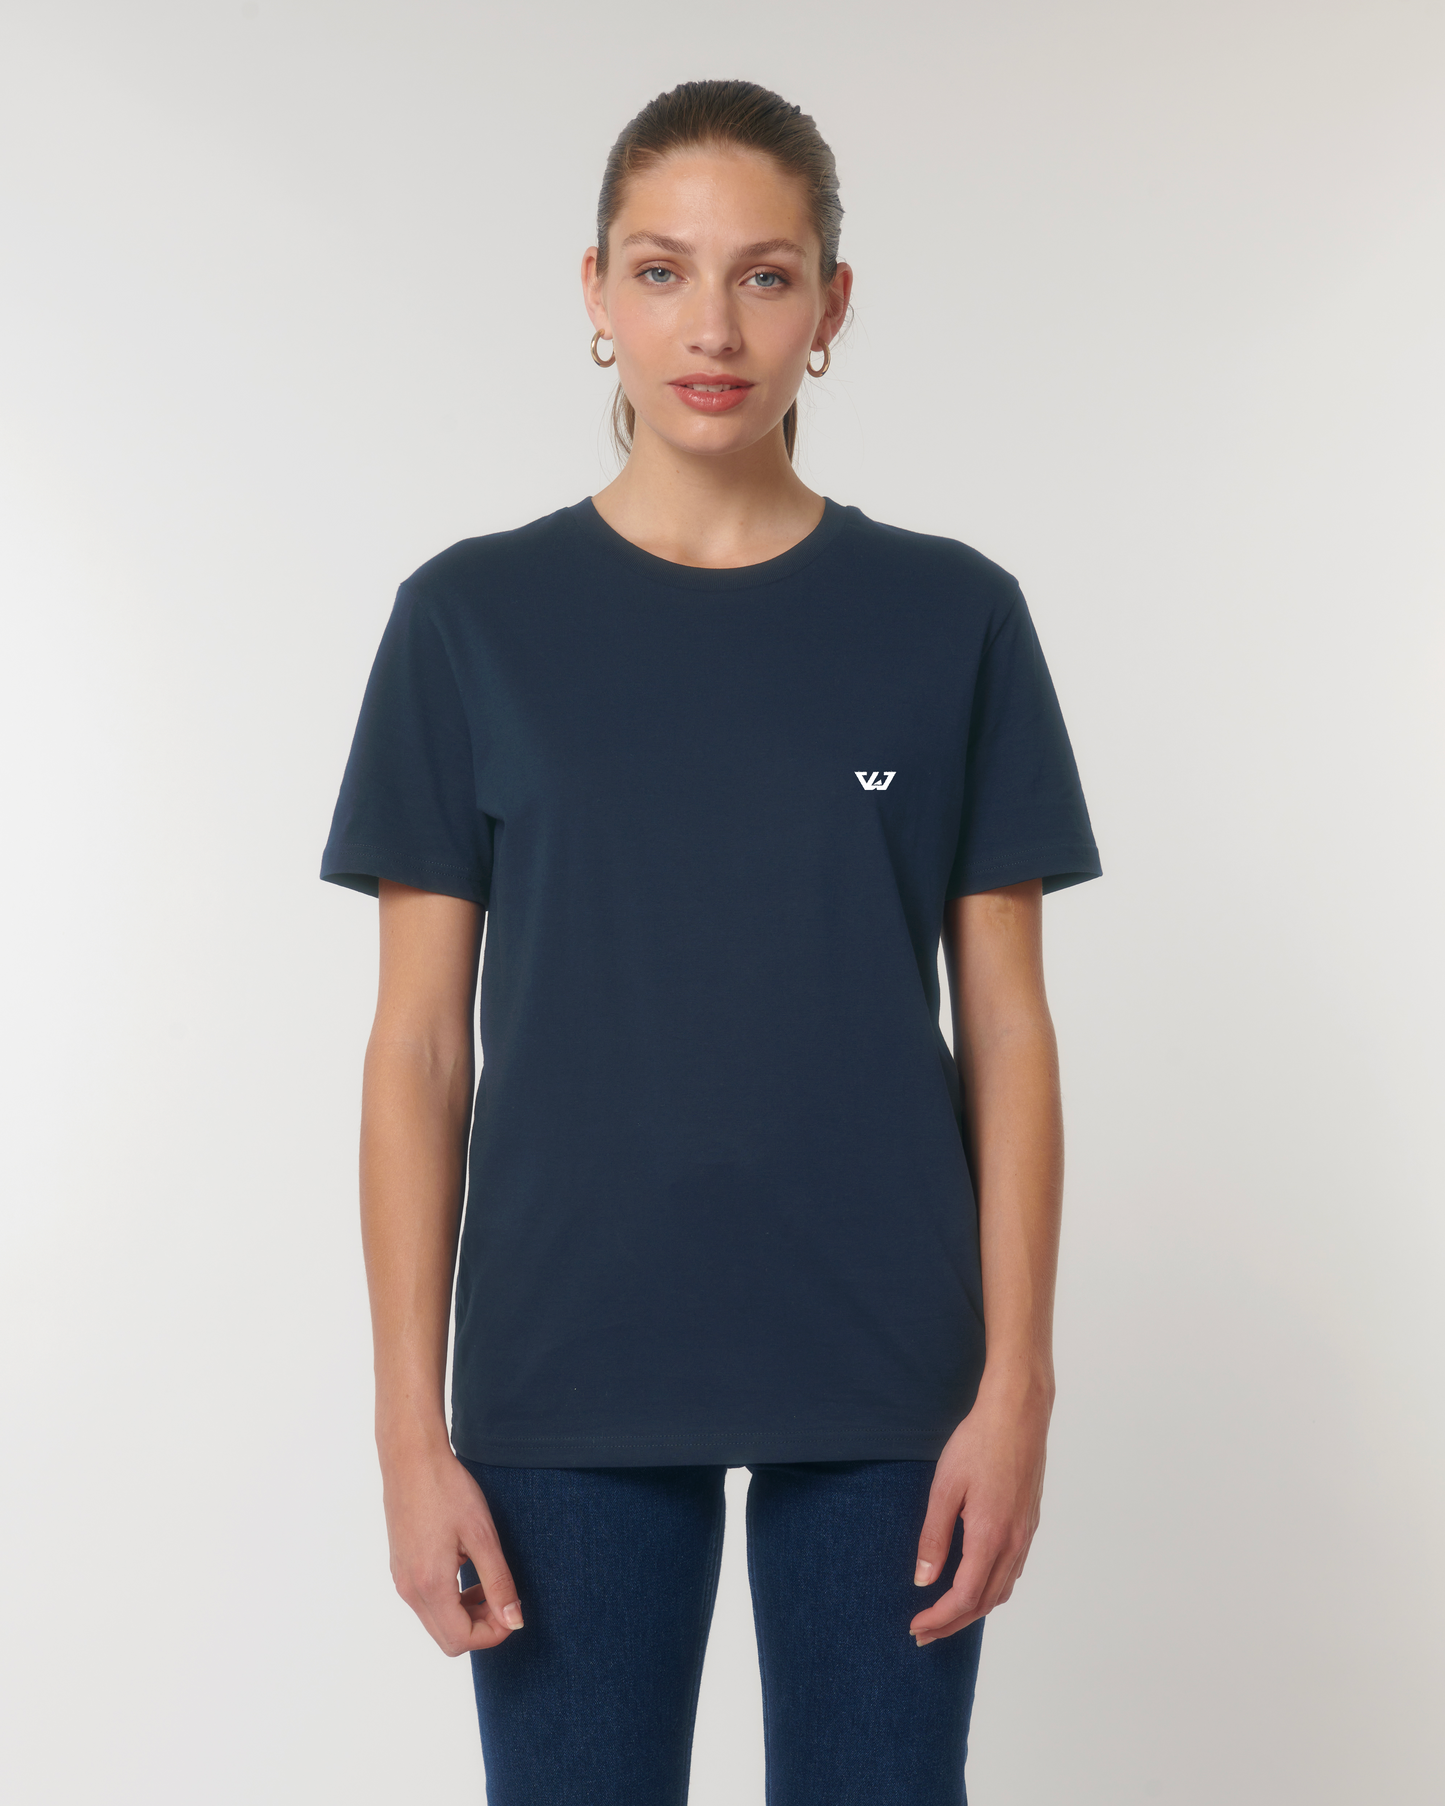 T-shirt bio Premium "R1250 GSA" Unisexe Dark alternative (+ de couleurs)